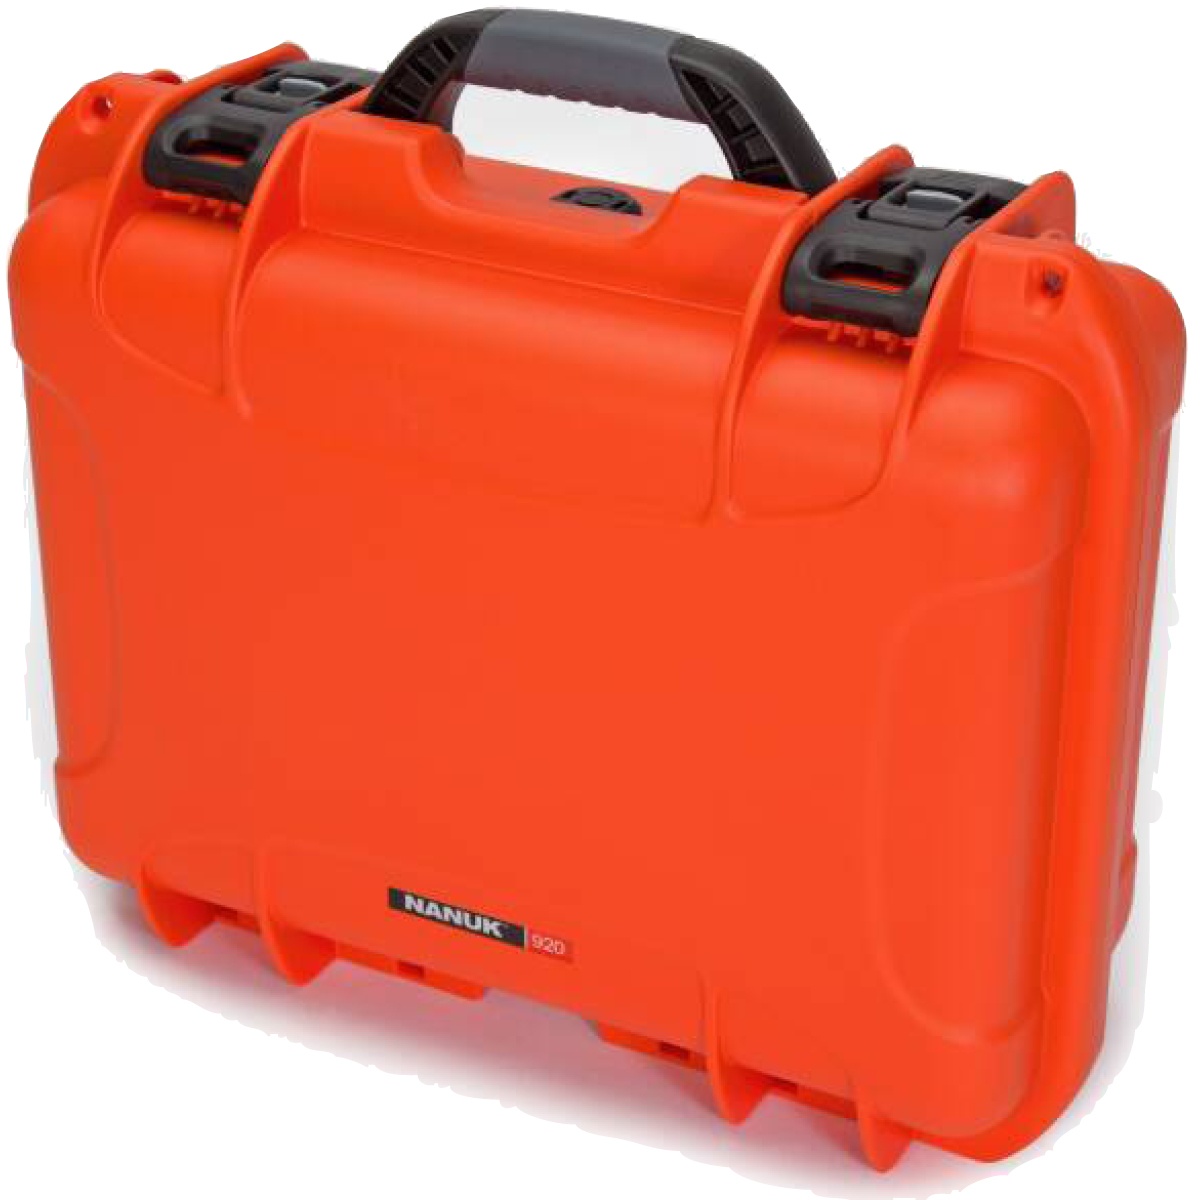 Nanuk Koffer 920 Trennwände + Organizer Orange